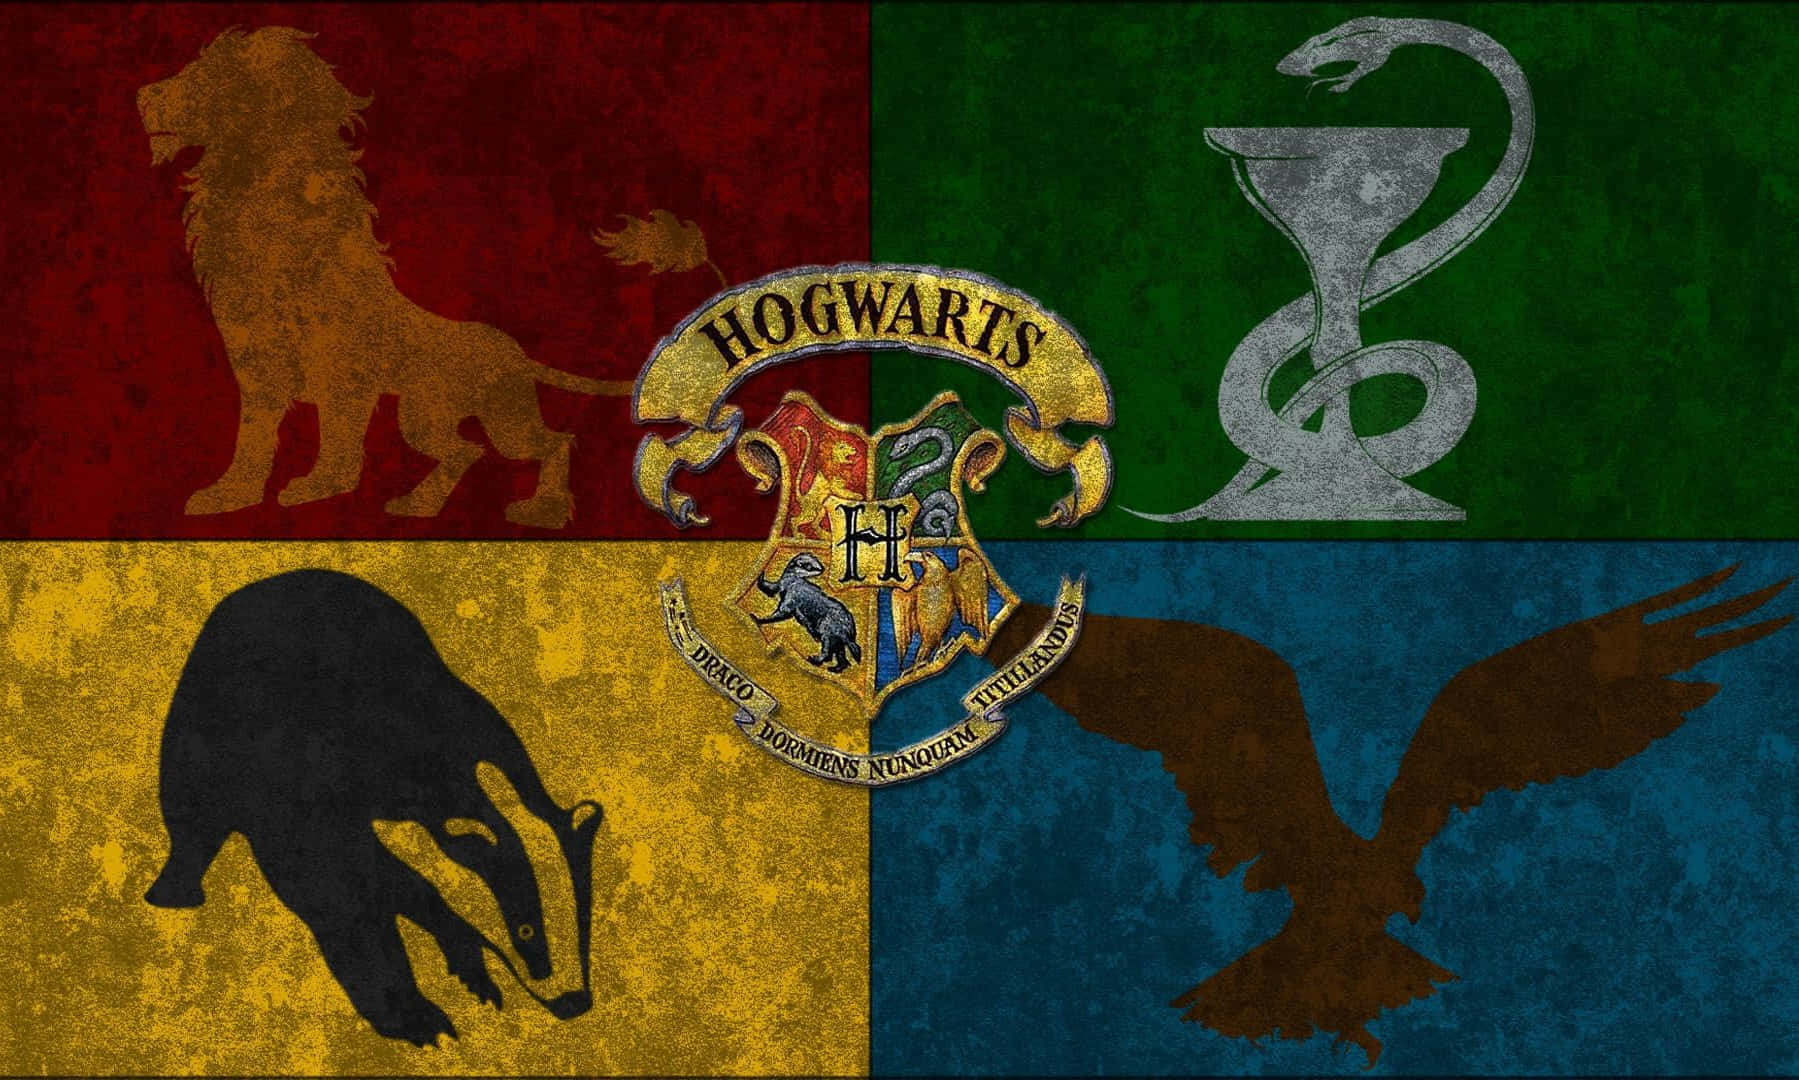 Four Houses, One Hogwarts" Wallpaper